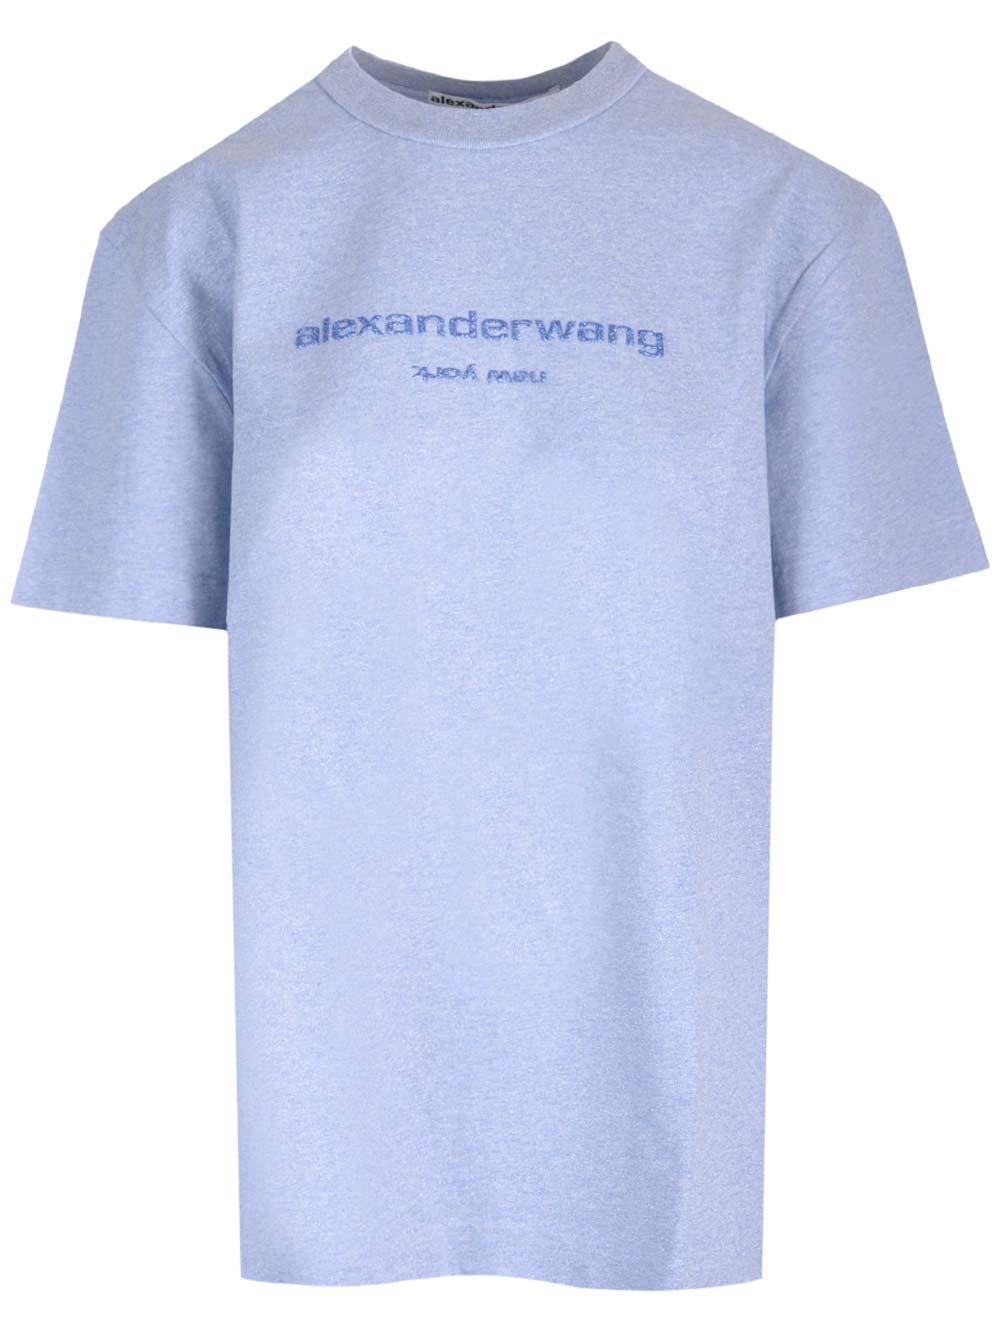 Pull And Bear Alexa Alexander Wang Logo T-shirt in Blue | Lyst UK